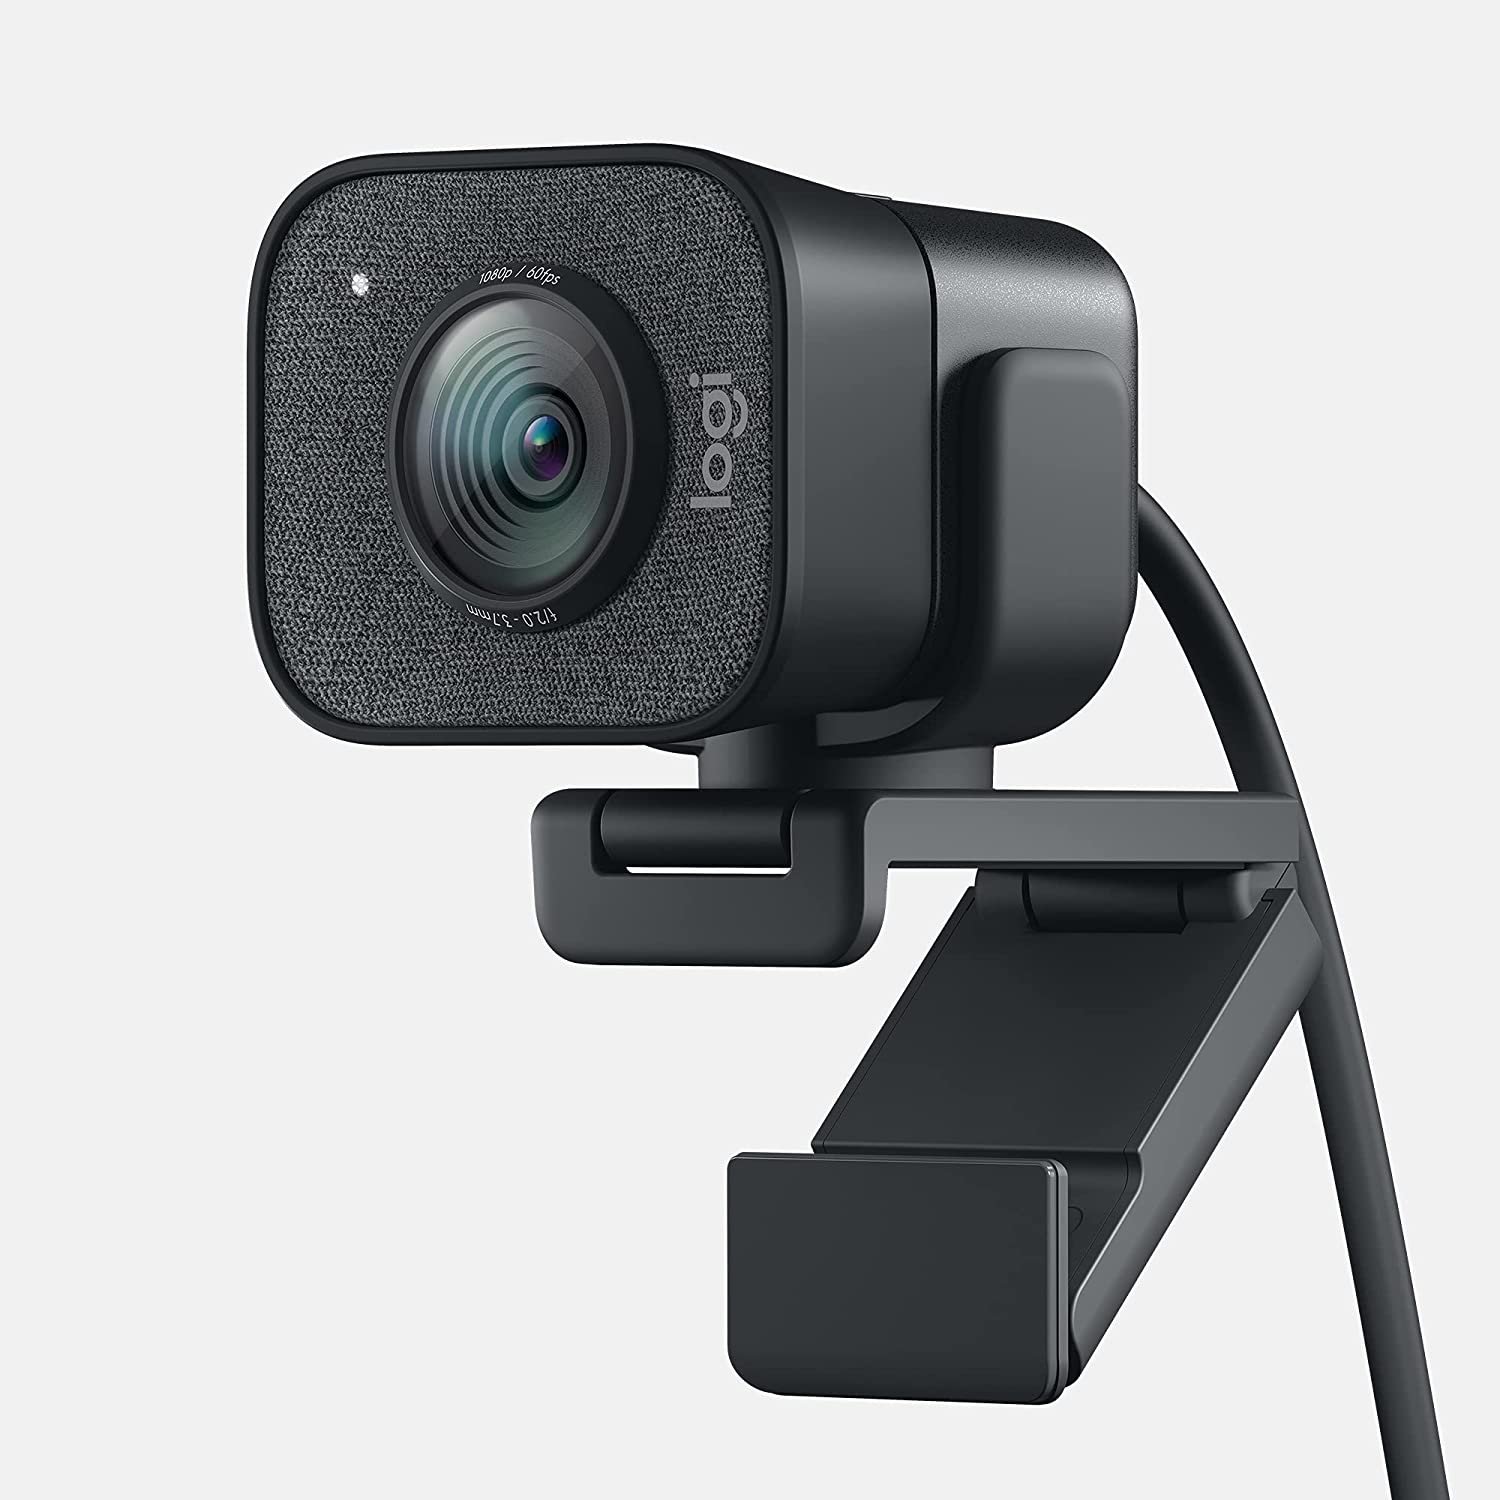 Logitech for Creators 스트리밍 및 컨텐츠 생성을 위한 StreamCam Premium Webcam, 풀 HD 1080p 60fps, 프리미엄 유리 렌즈, 스마트 오토 포커스, PC/Mac용 – 그래파이트